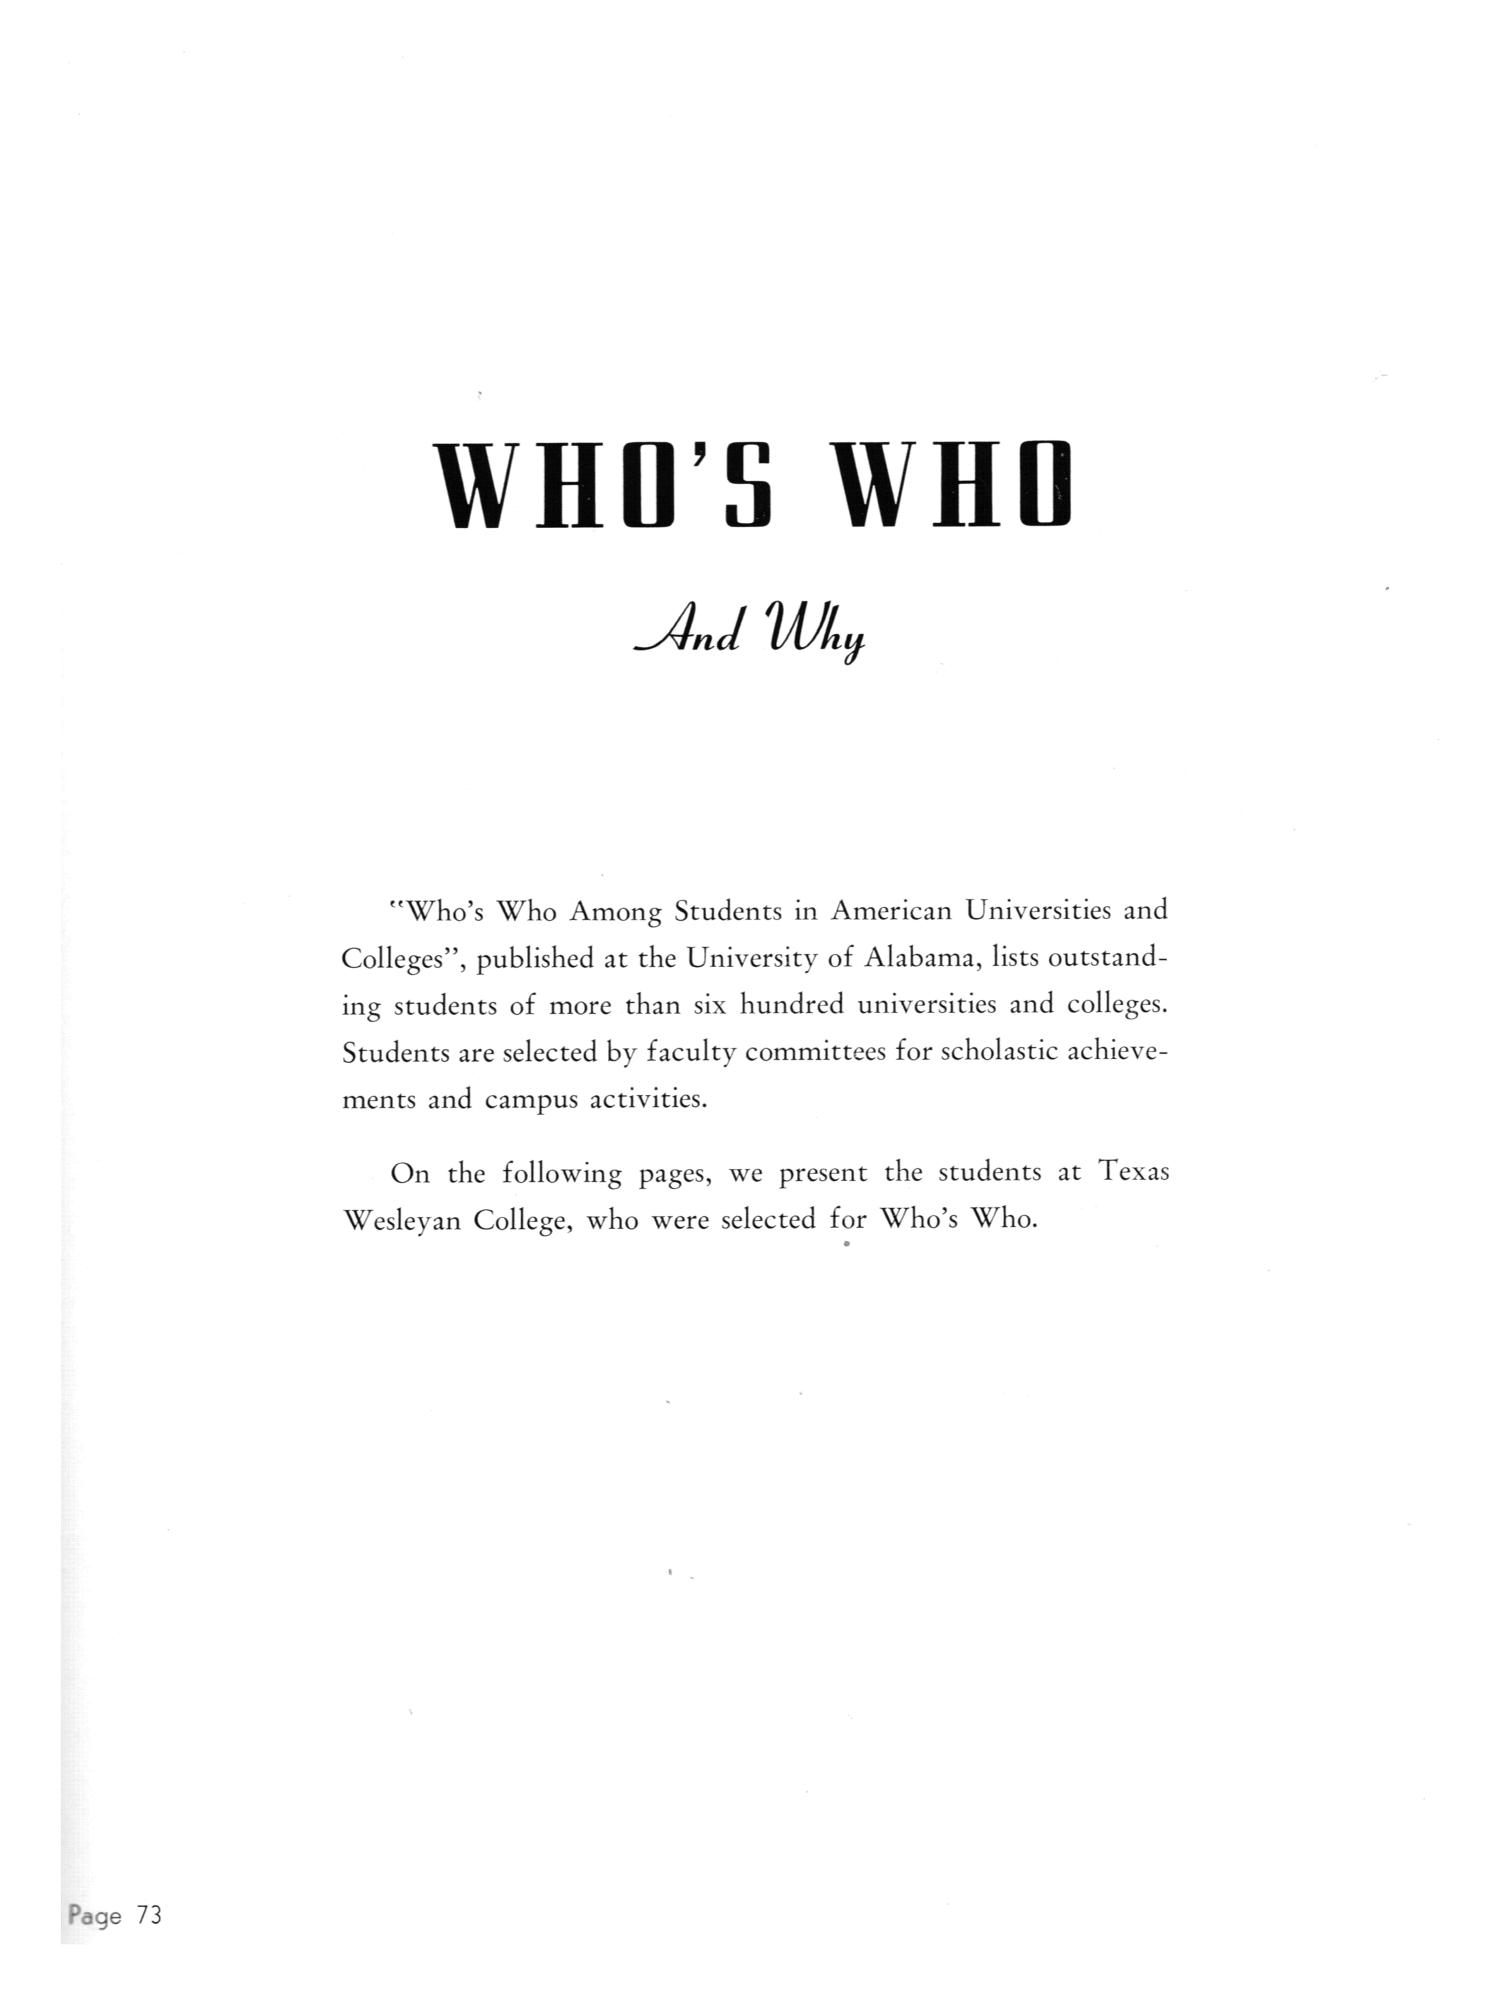 TXWECO, Yearbook of Texas Wesleyan College, 1944
                                                
                                                    73
                                                